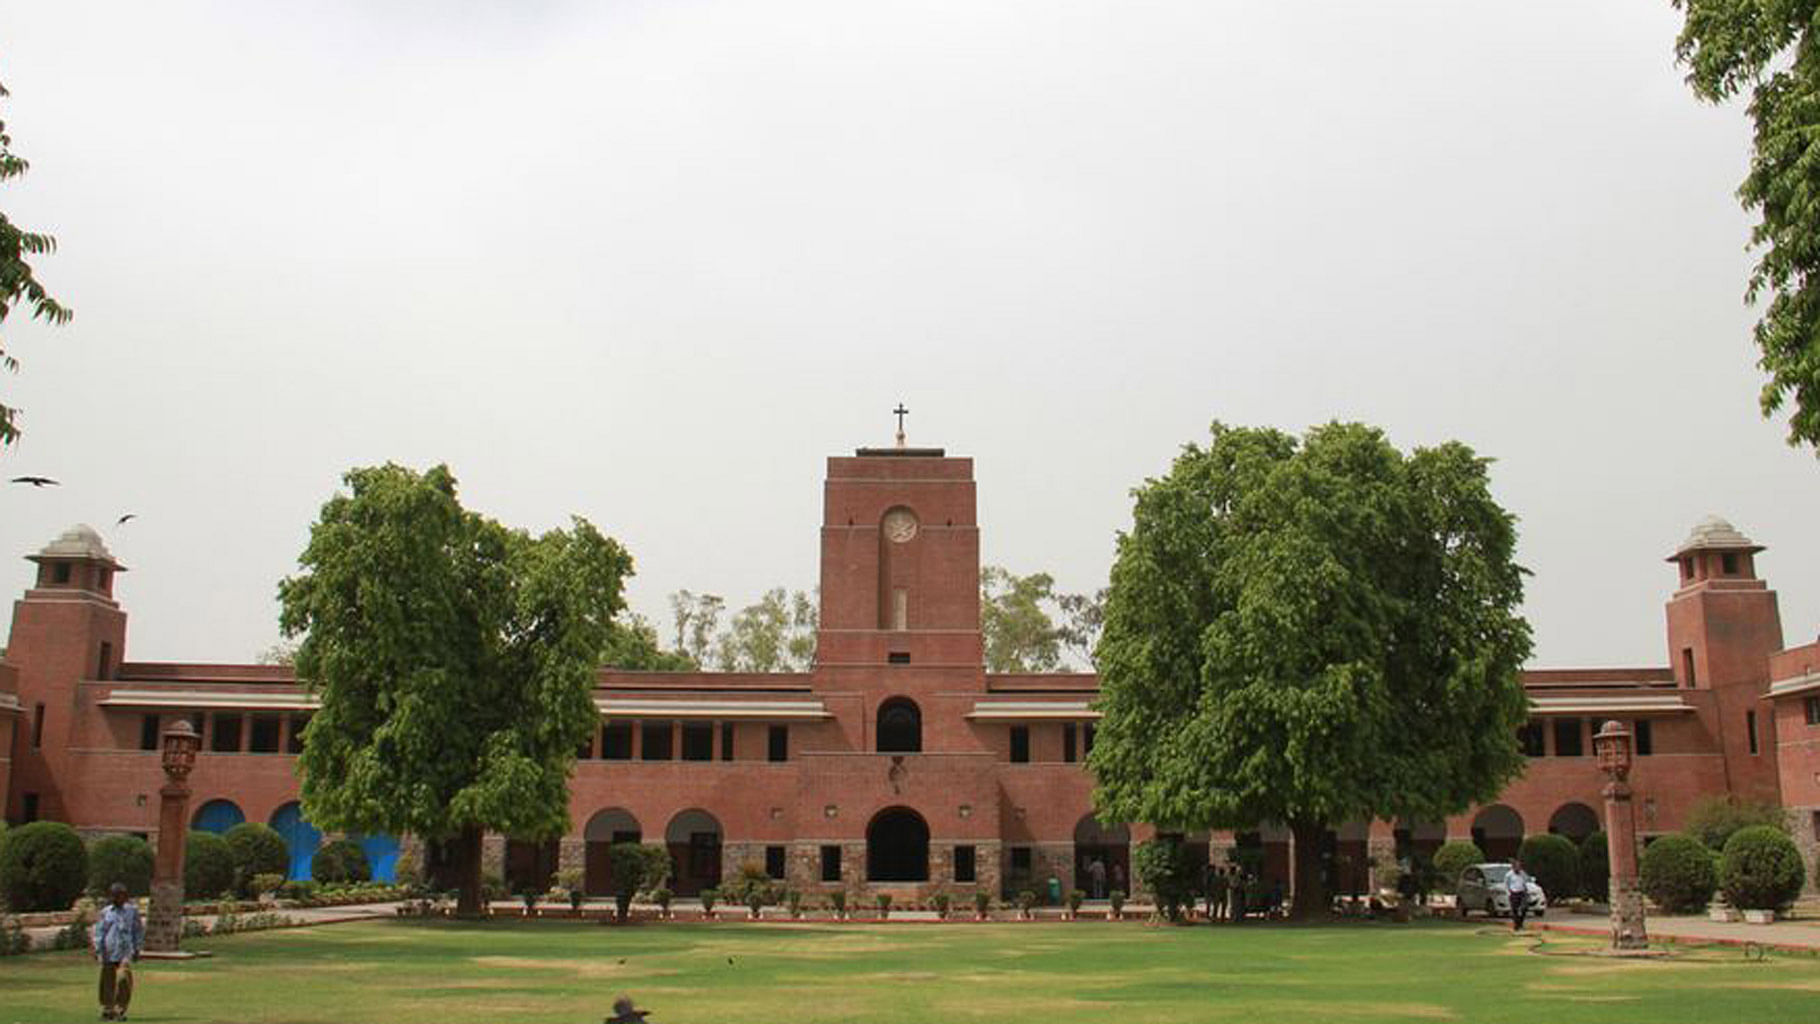 St. Stephens is one of the top colleges of Delhi University. (Photo:&nbsp;<a href="http://www.ststephens.edu/archives/gallerystart.htm">www.ststephens.edu</a>)